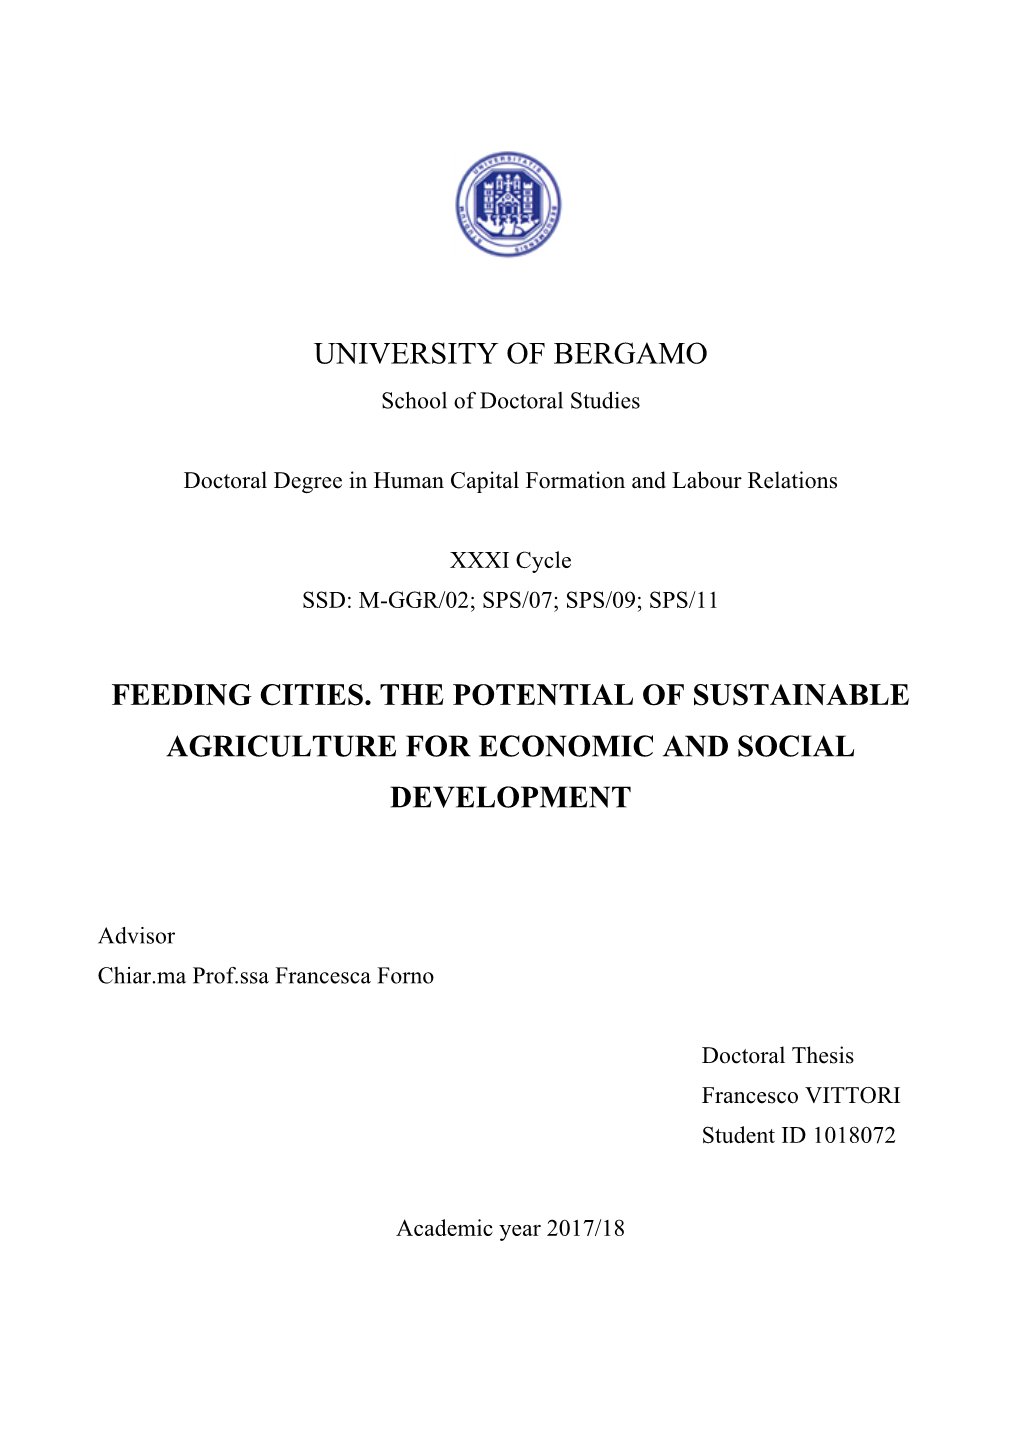 University of Bergamo Feeding Cities. the Potential